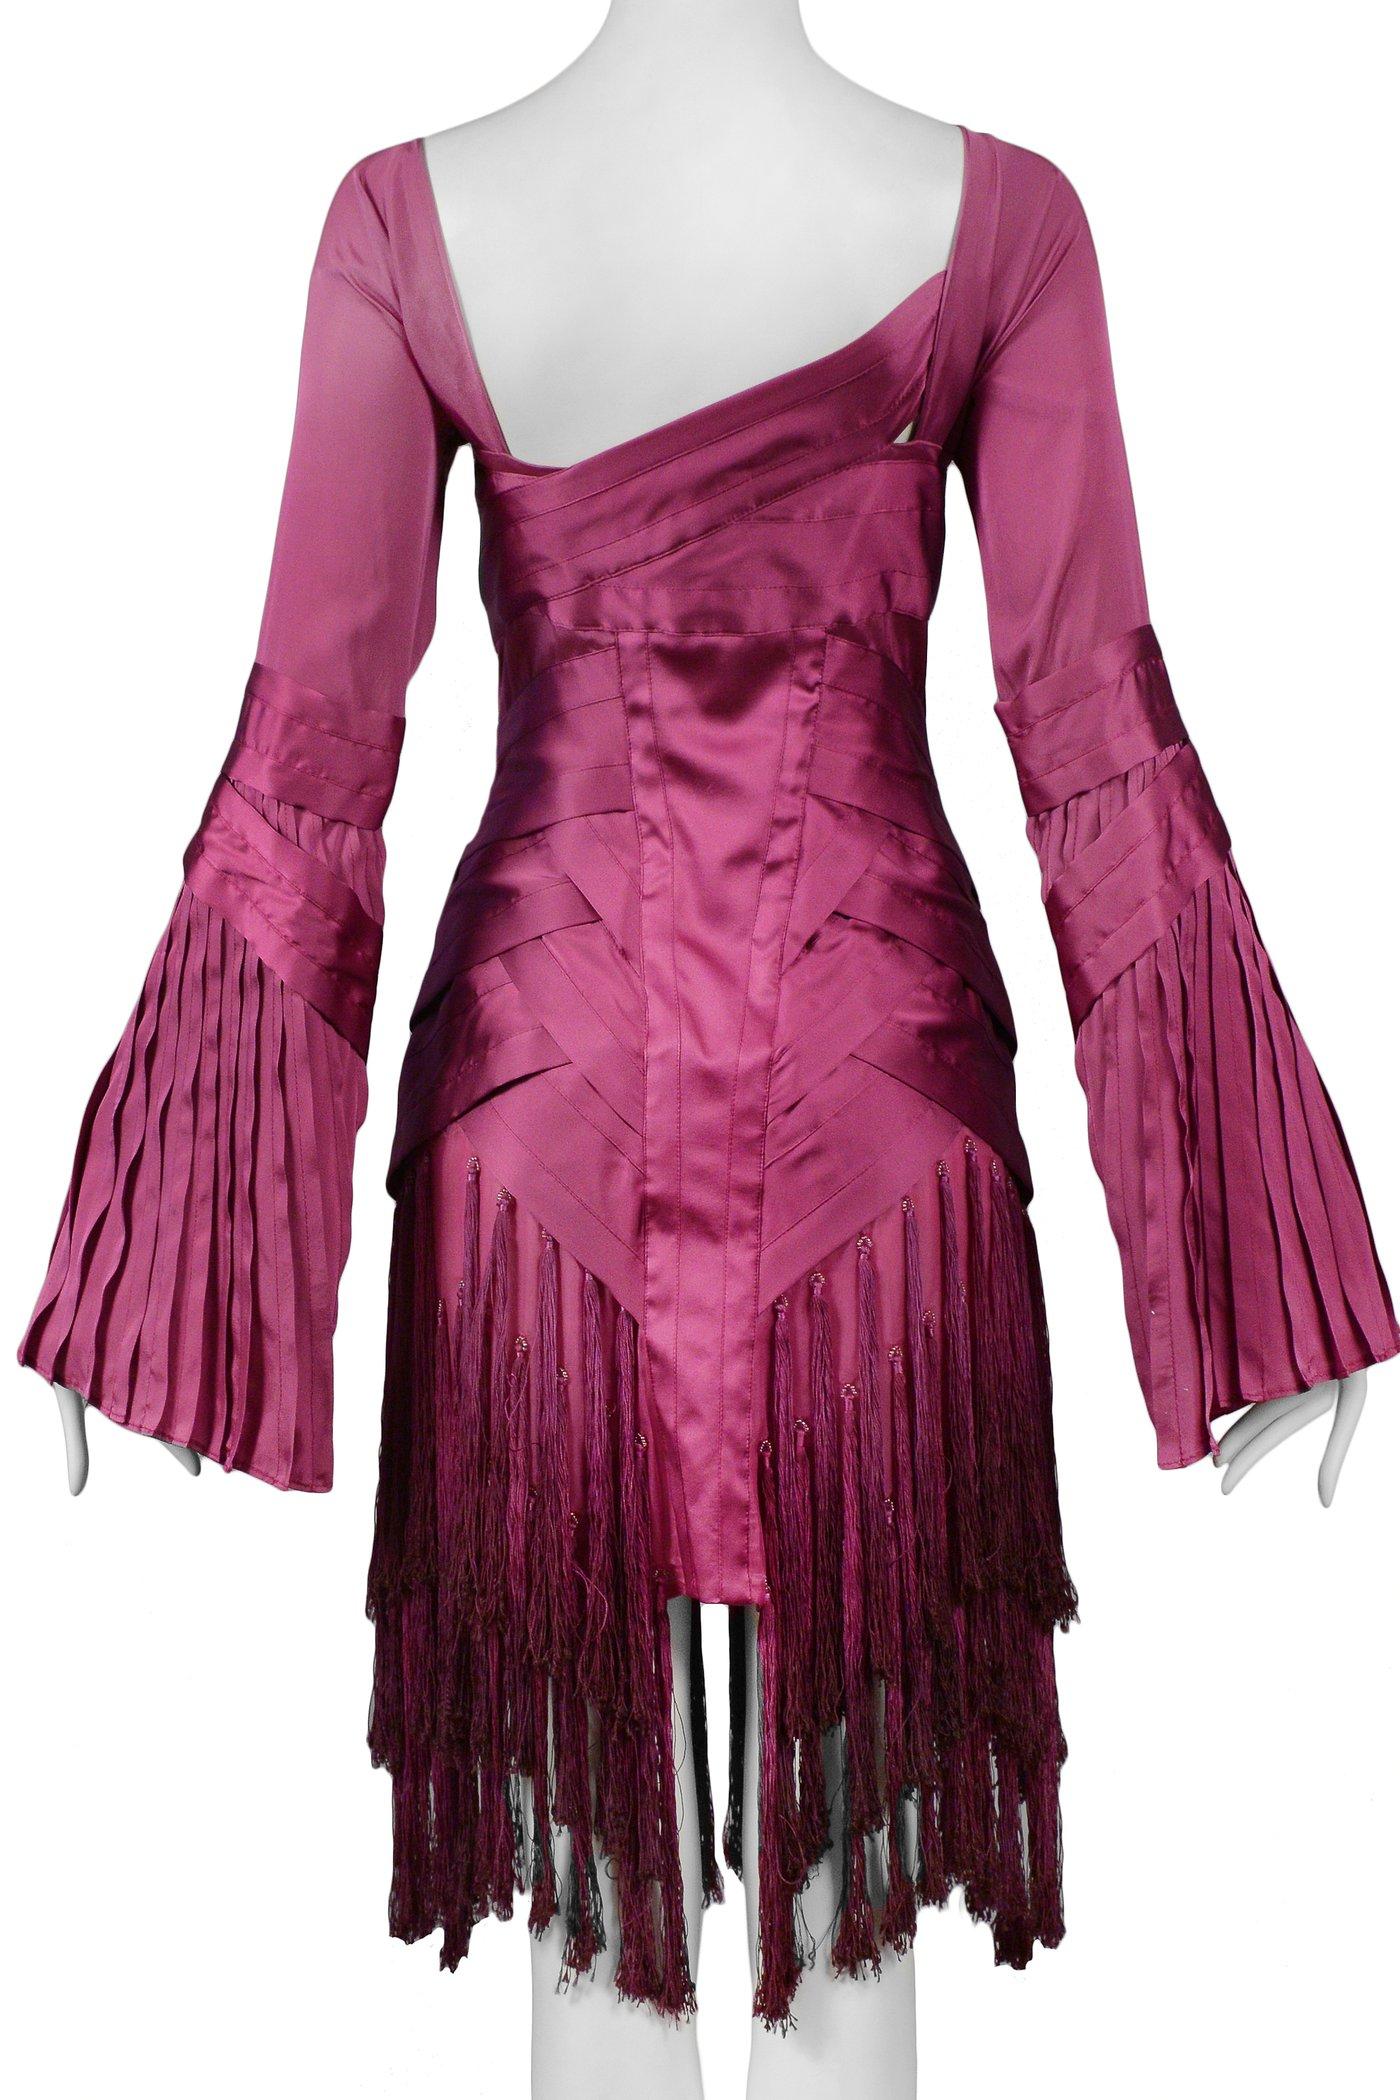 Women's Stunning Gucci By Tom Ford Magenta Tassel Runway Dress 2004 